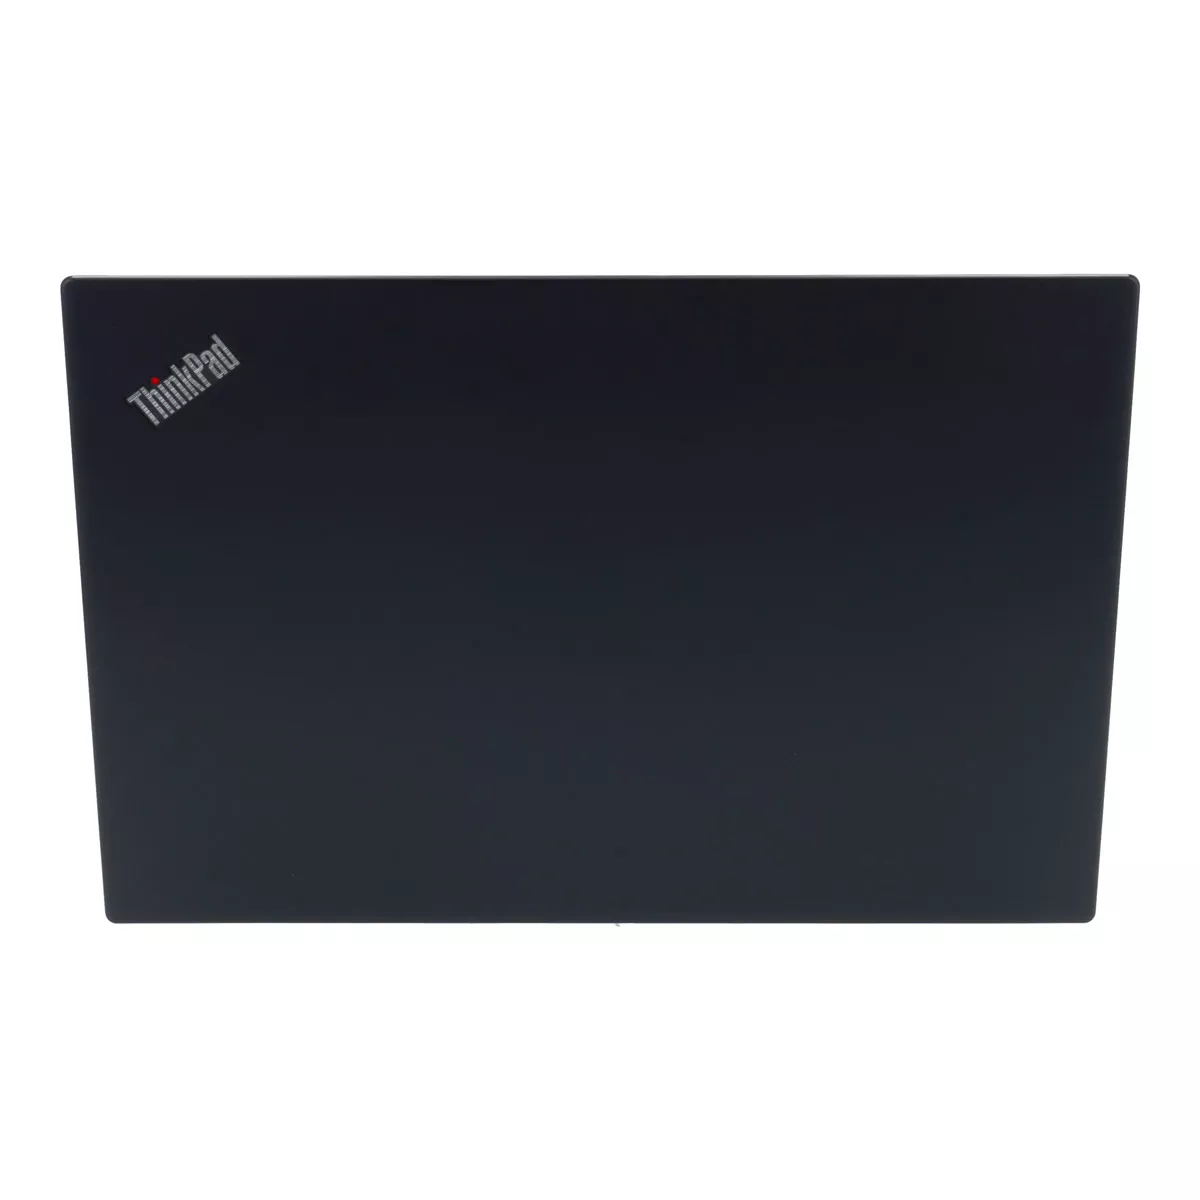 Lenovo ThinkPad T480s Core i5 8250U Full-HD 500 GB M.2 nVME SSD Webcam A